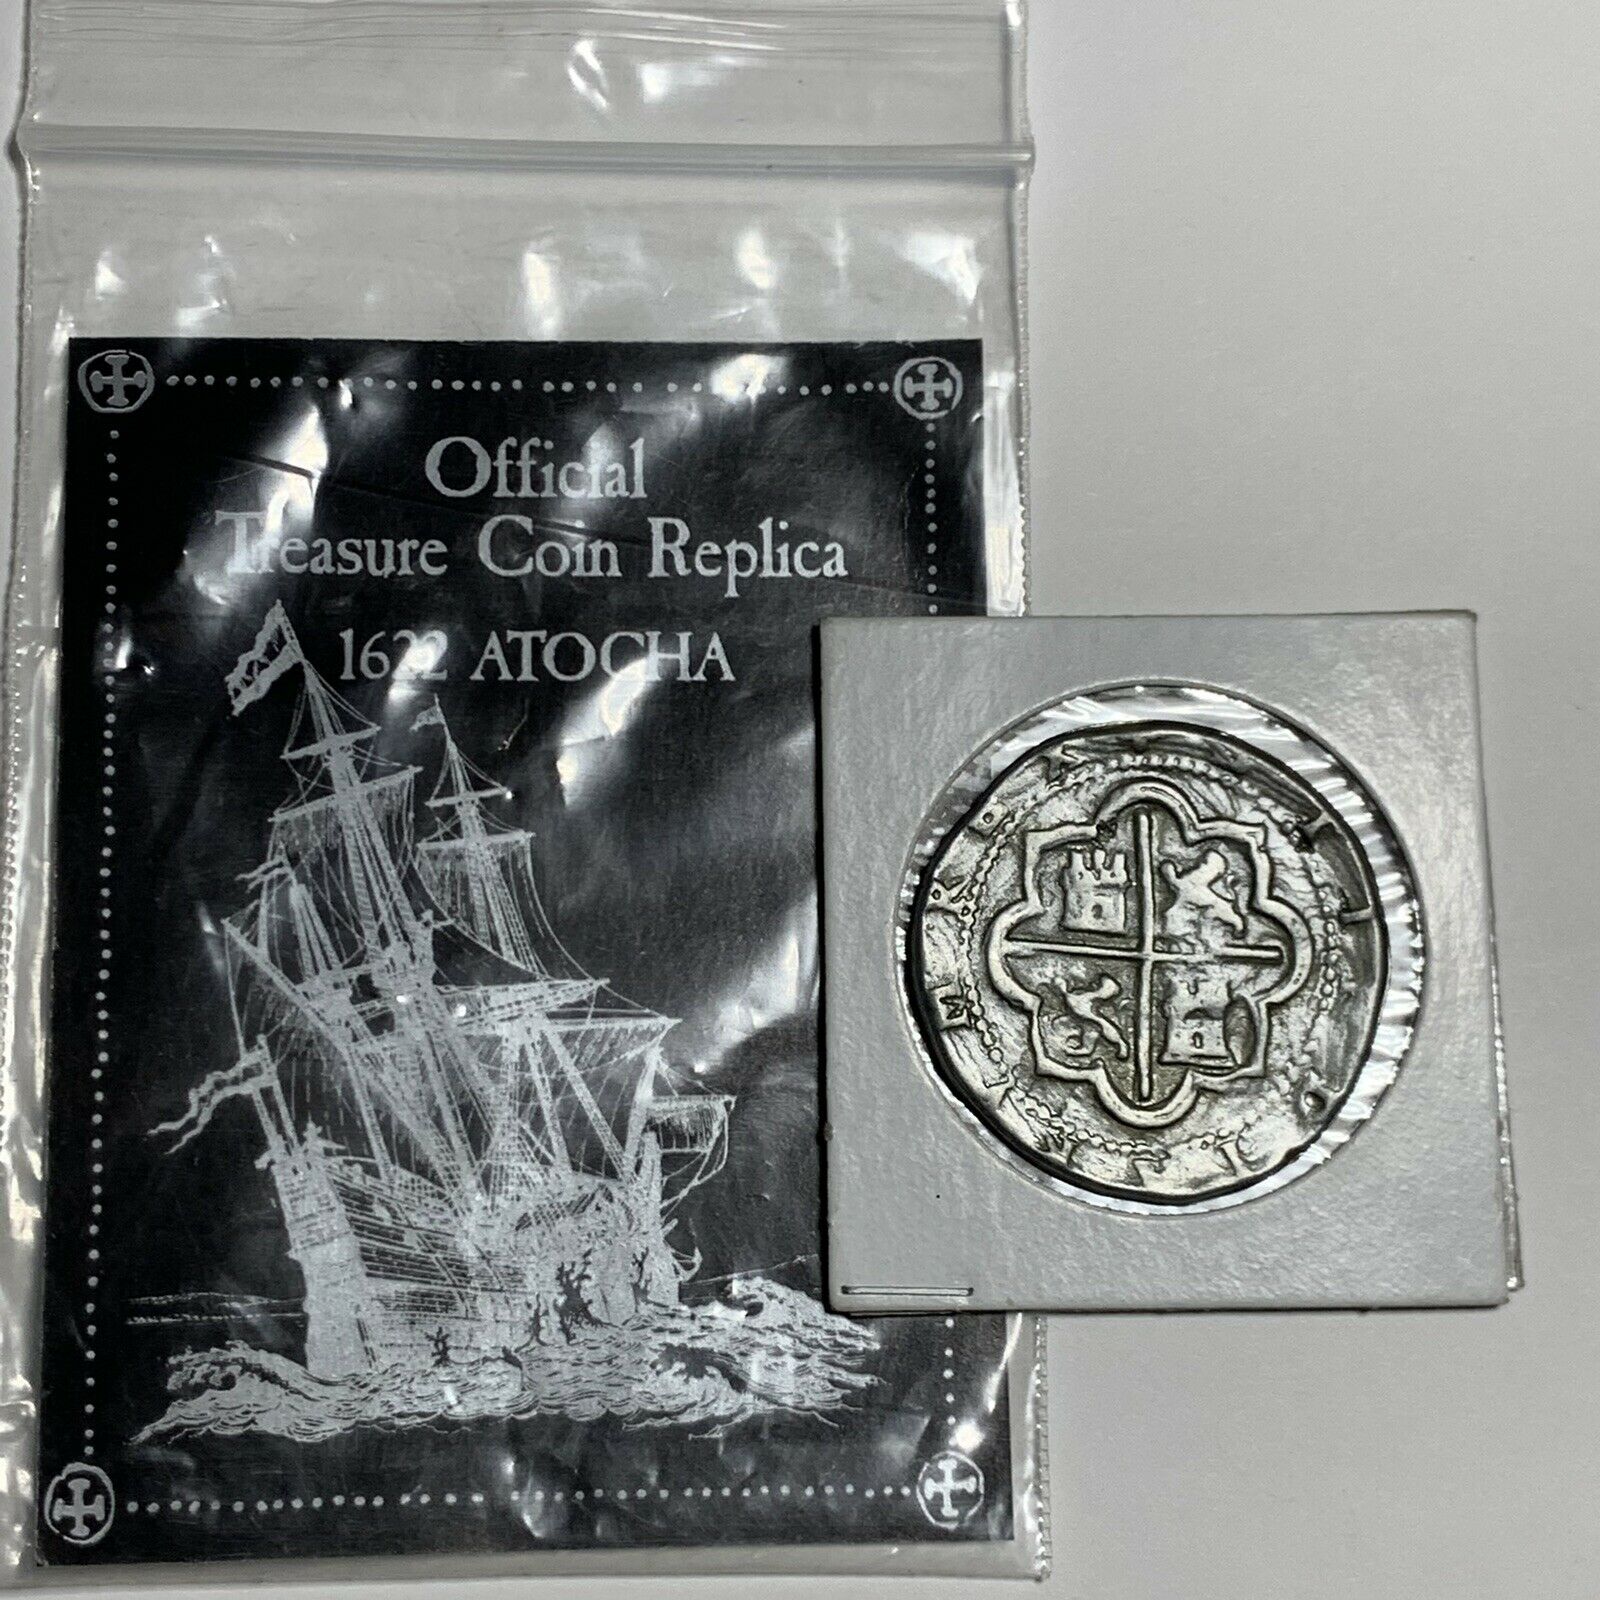 1622 Atocha Official Treasure Coin Replica